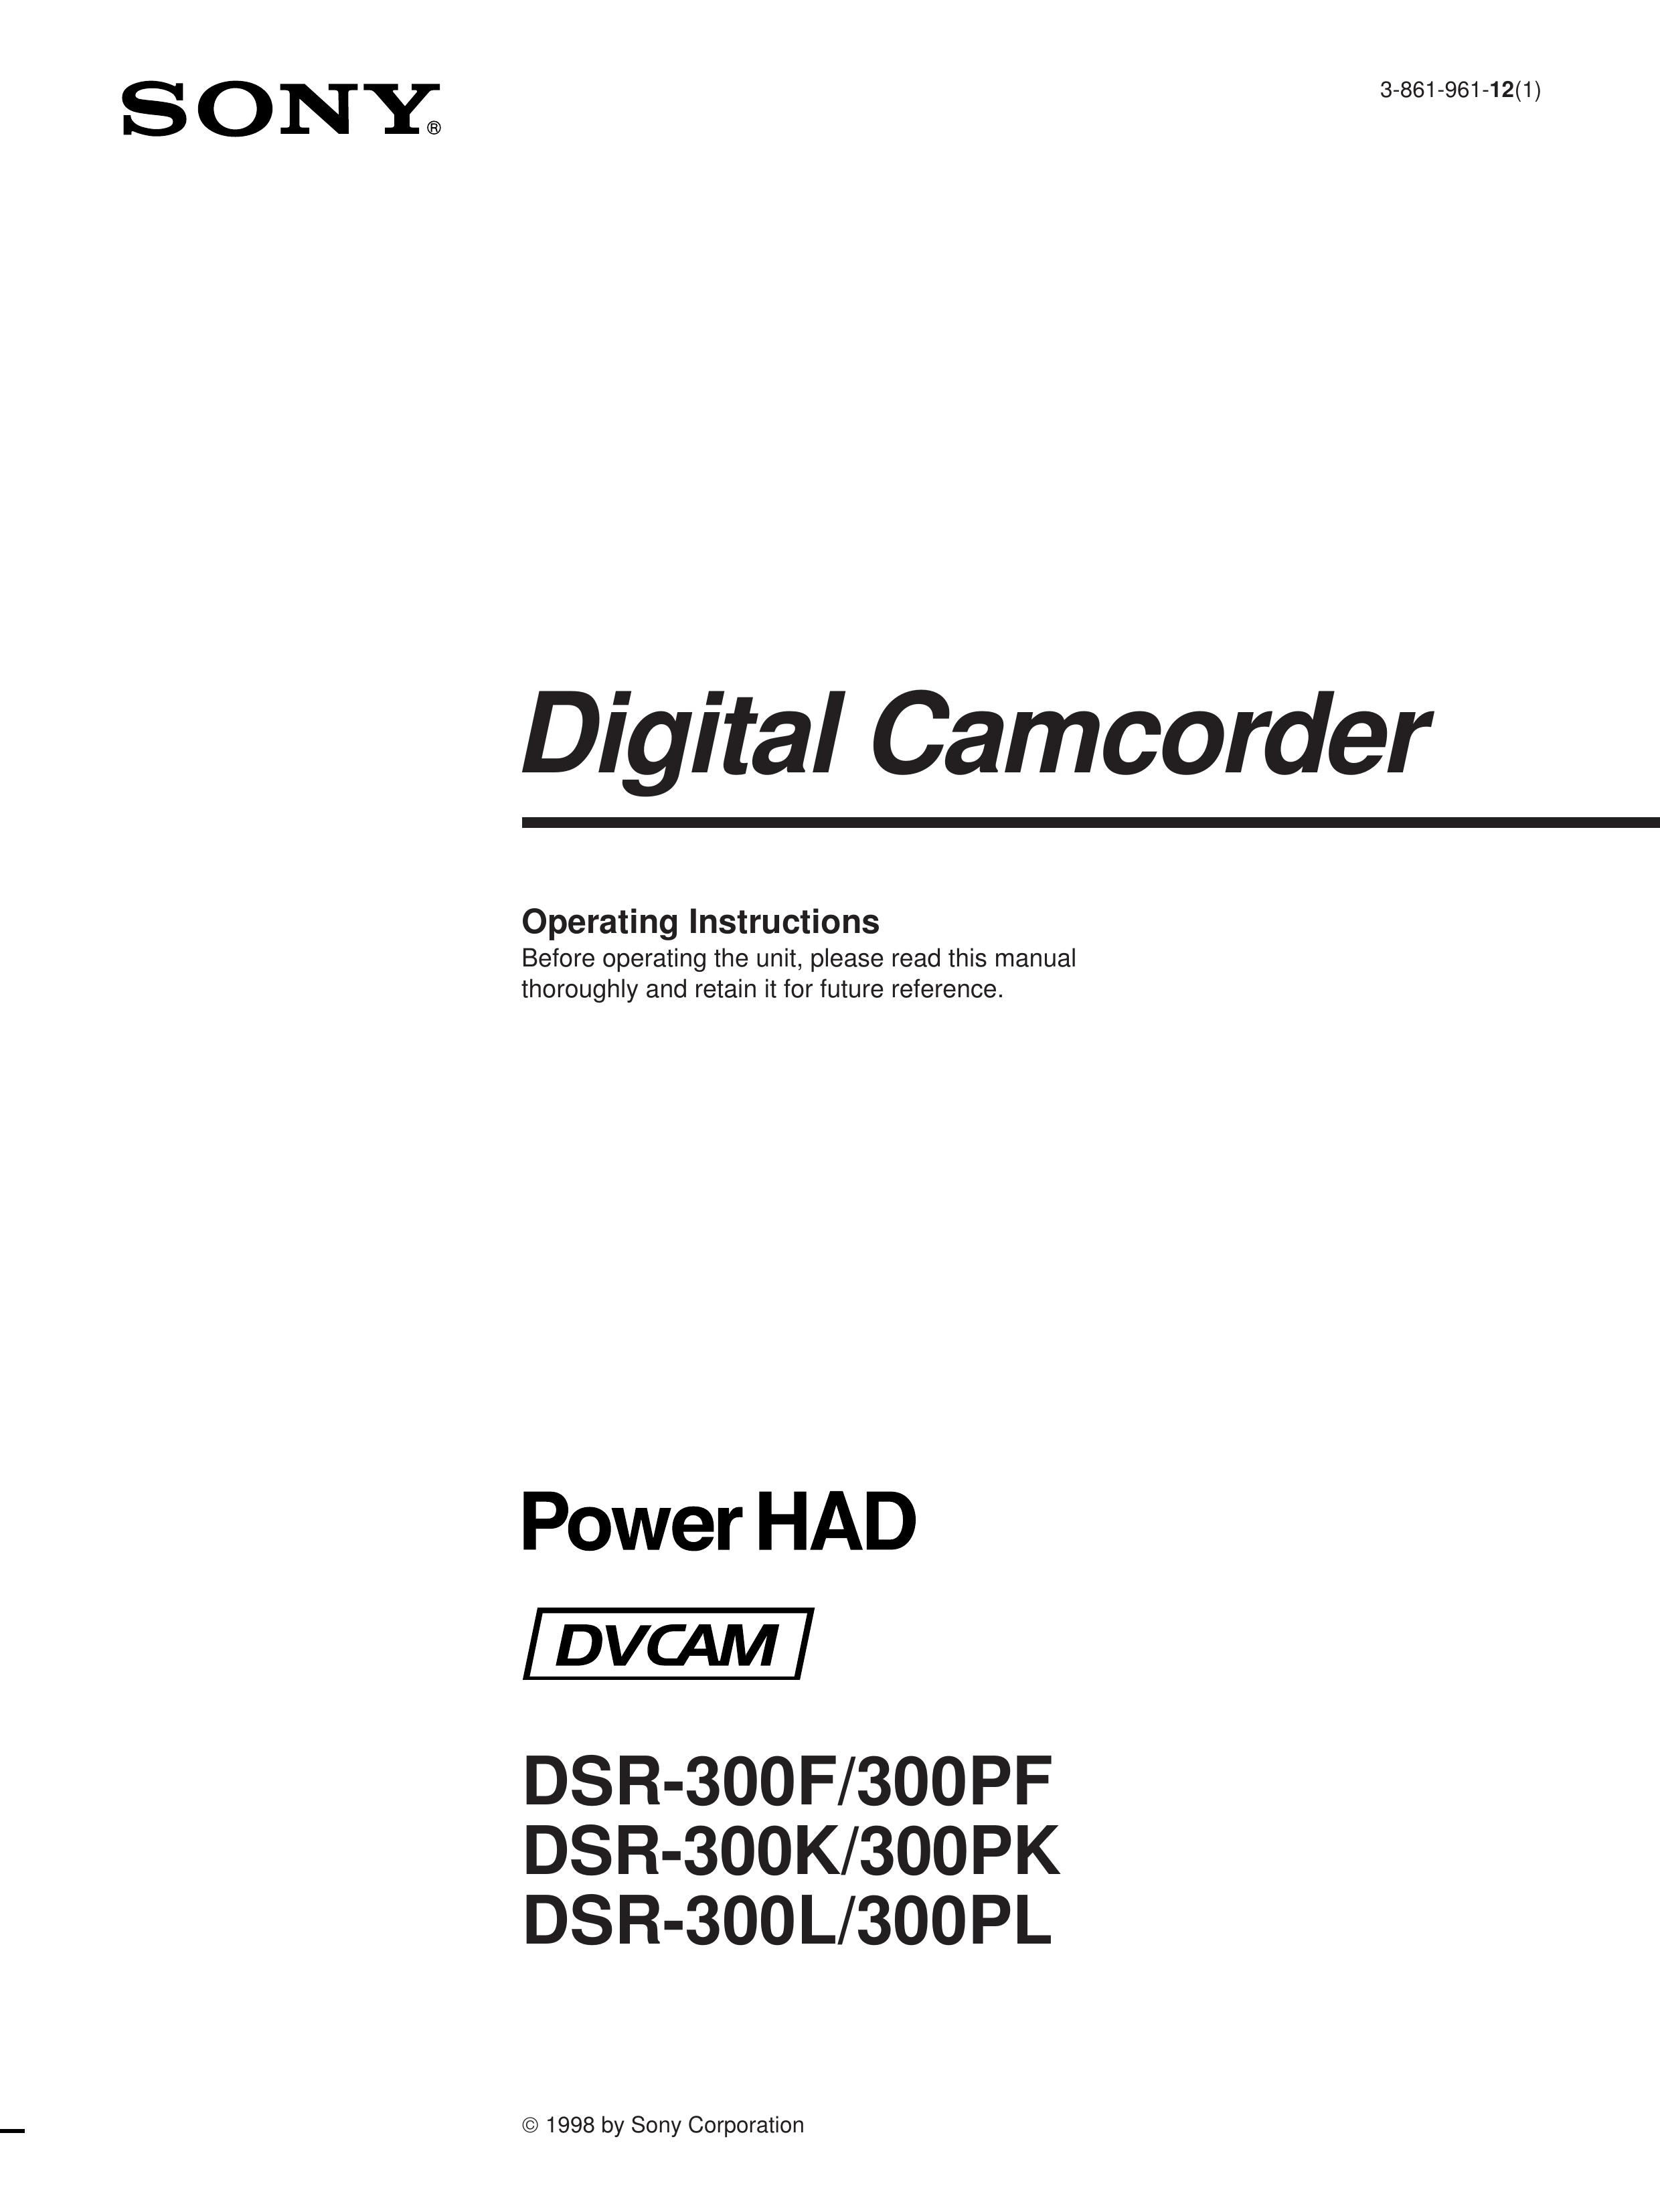 Sony 300PK Camcorder User Manual